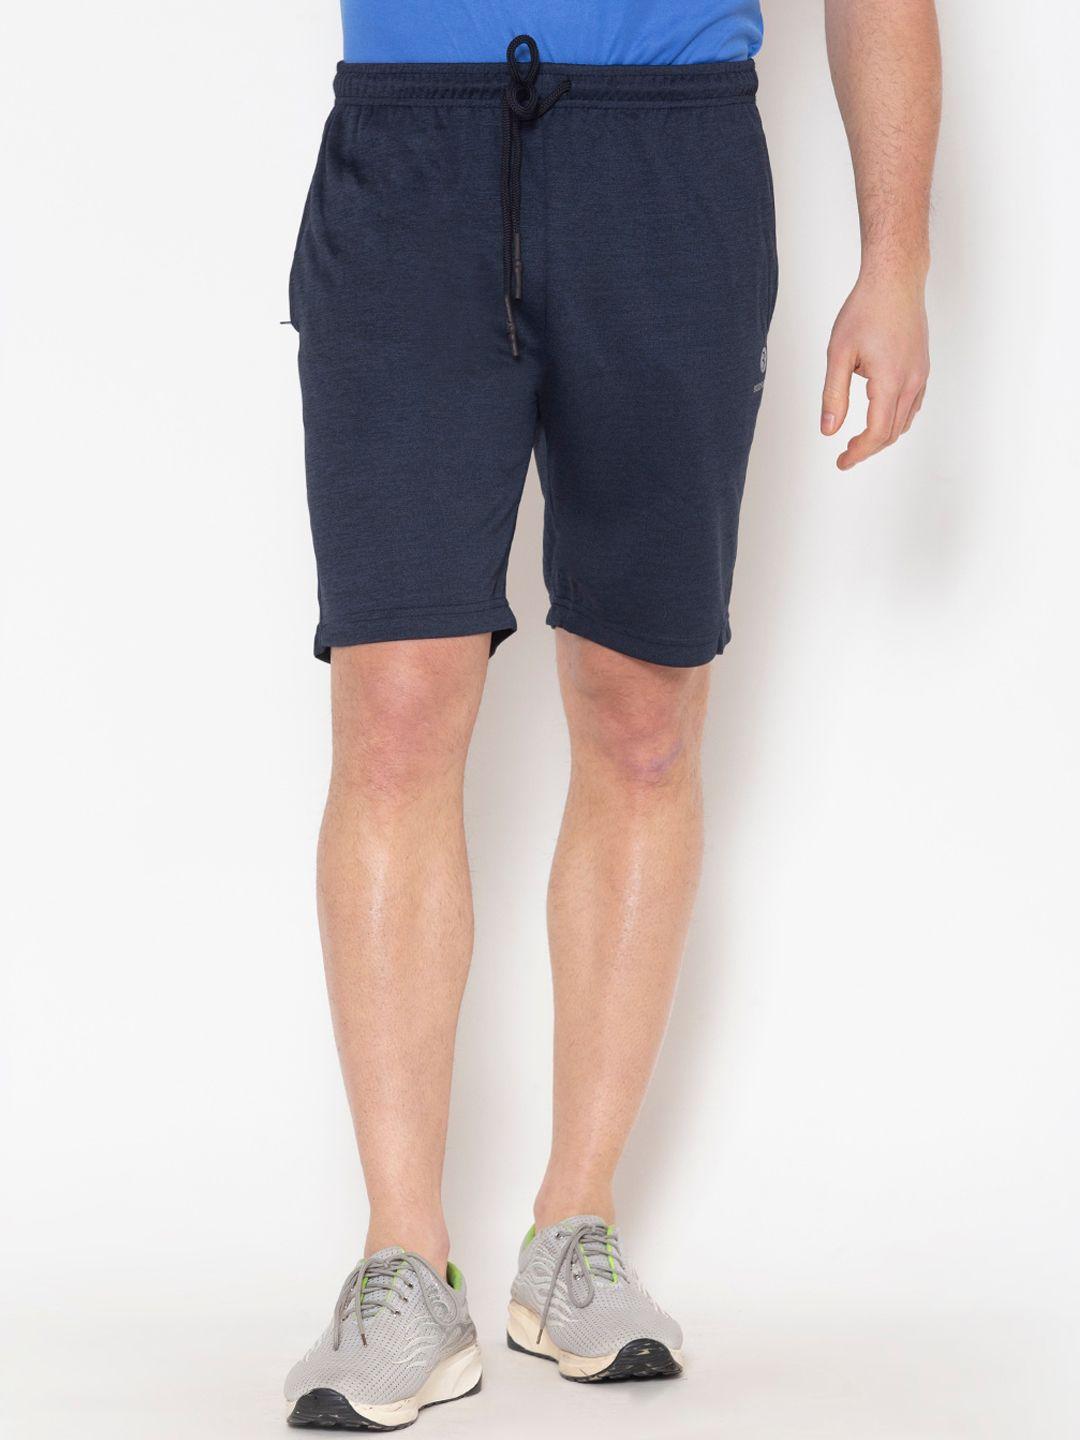 bodyactive men navy blue solid shorts